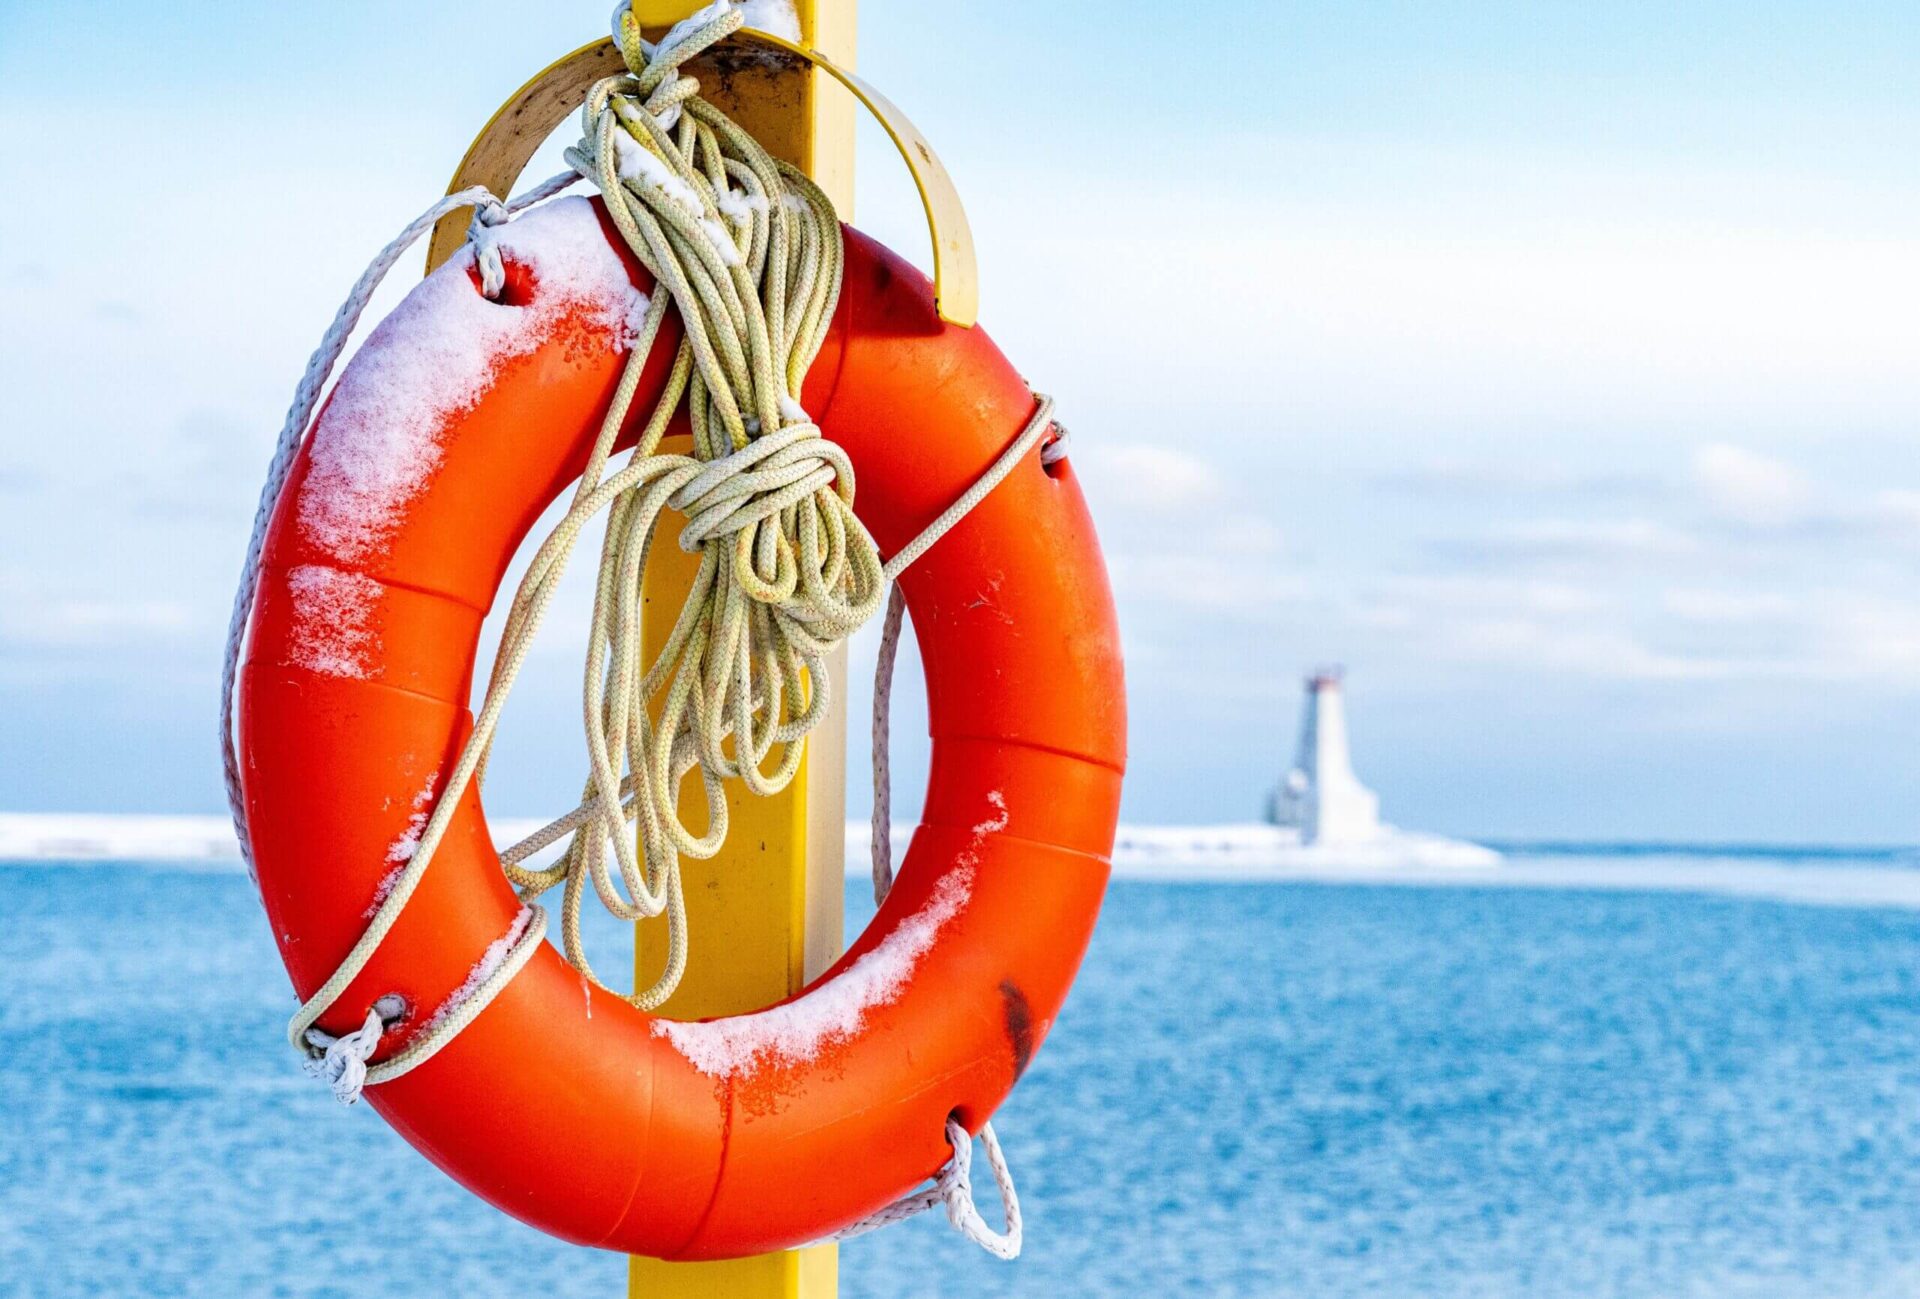 Sailing safety tips